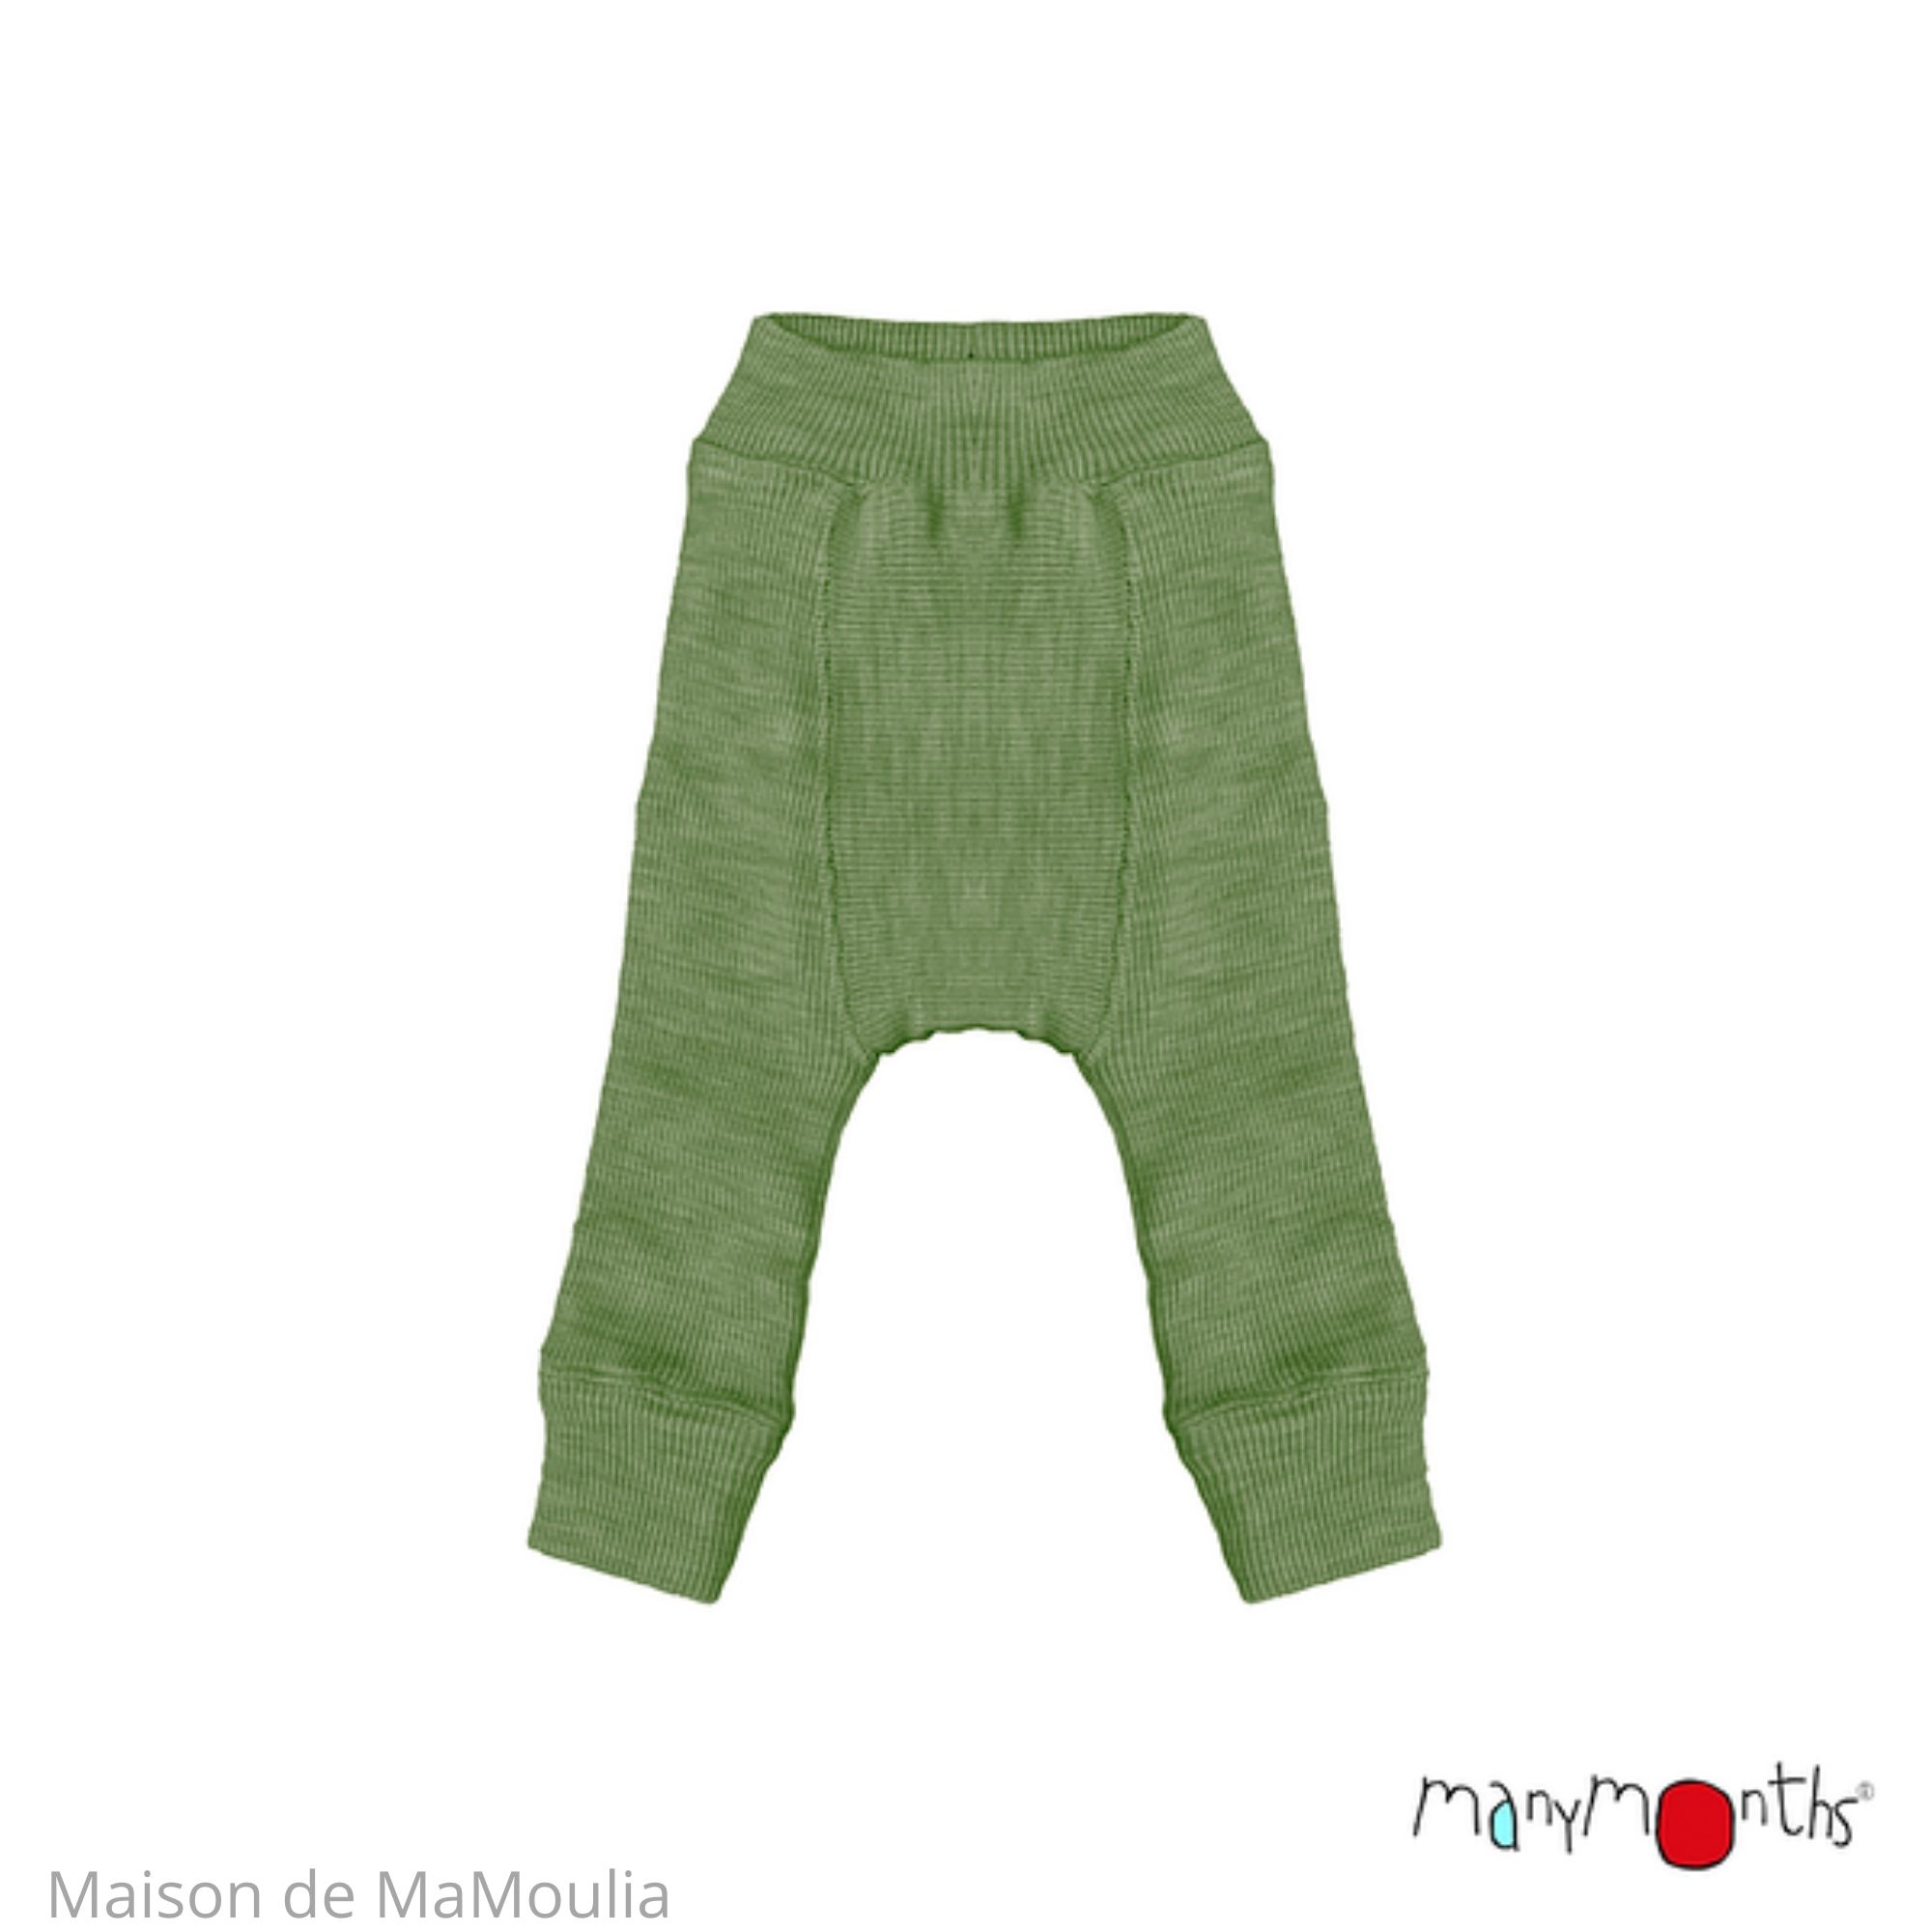 longies-pantalon-reversible-evolutif-bebe-enfant-pure-laine-merinos-manymonths-maison-de-mamoulia-jade-green-vert-